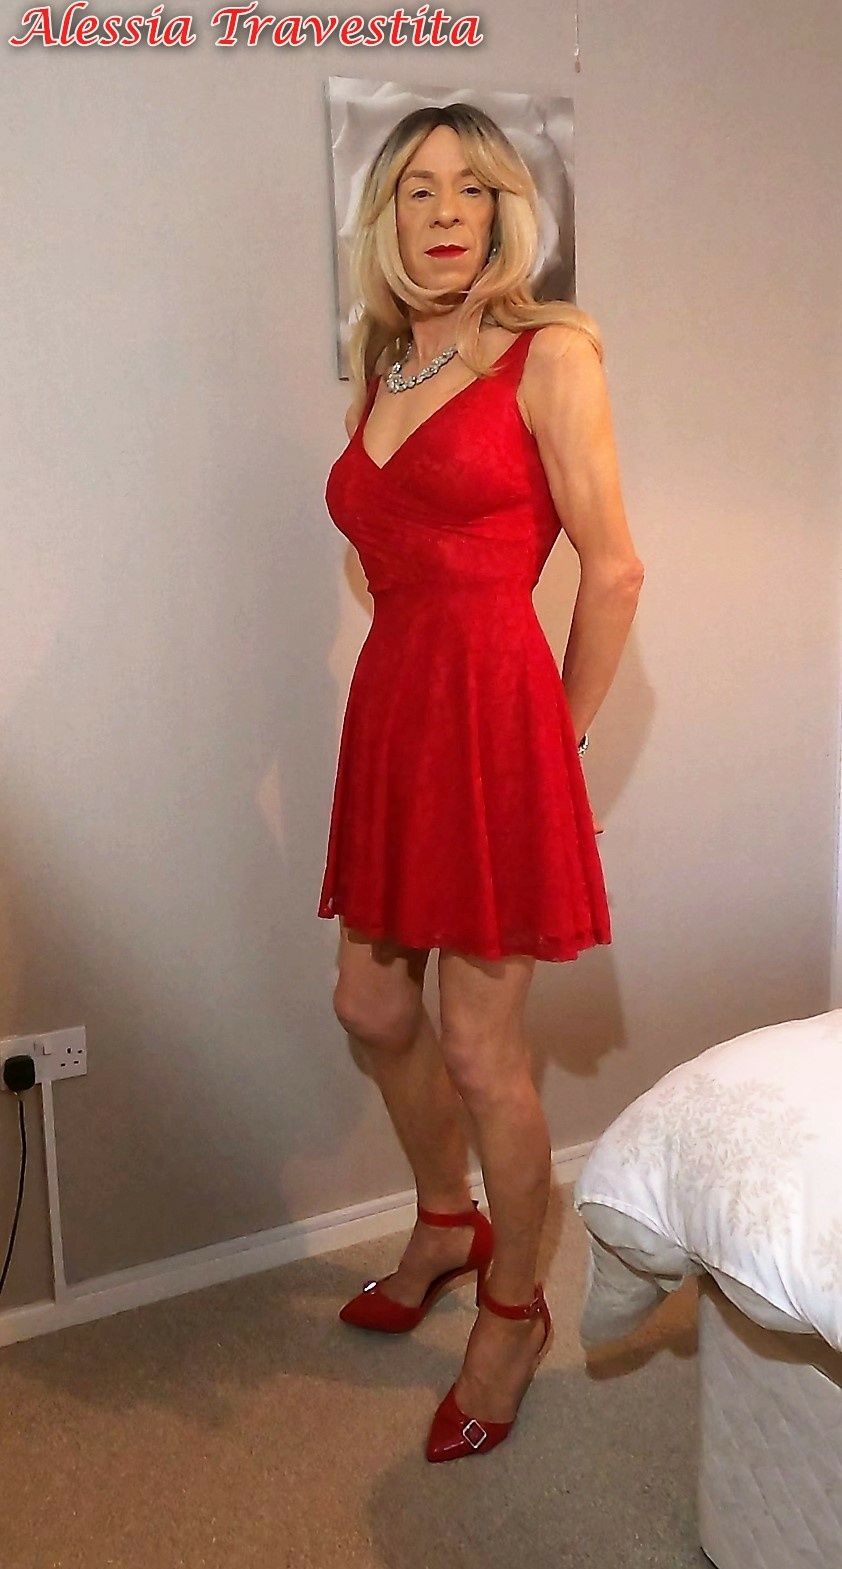 65 Alessia Travestita in Flirty Red Dress #7